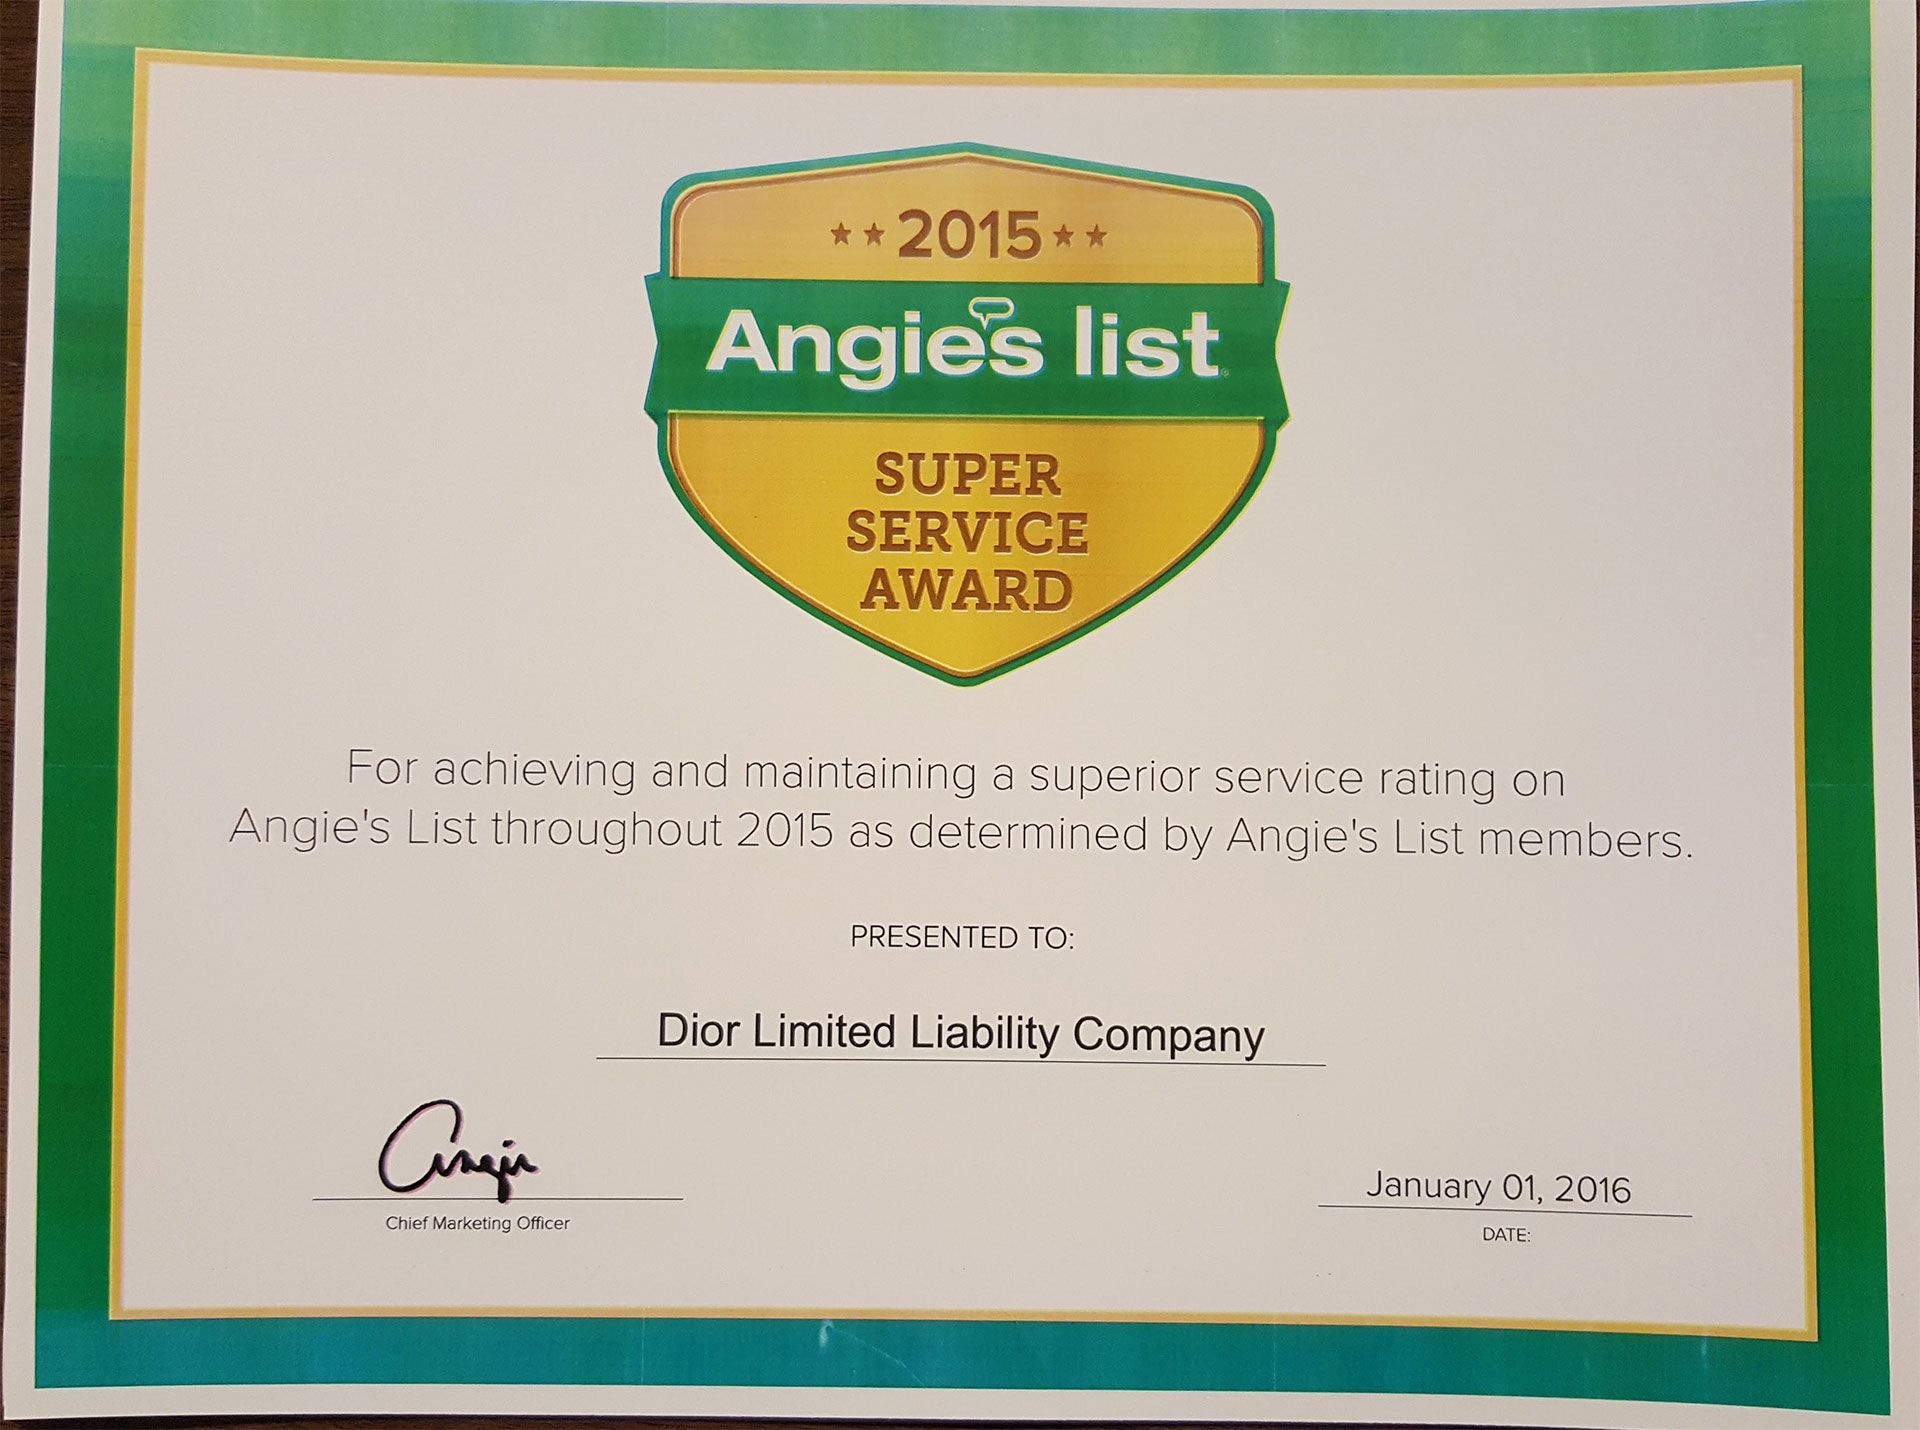 Angie's List Super Service Award certificate